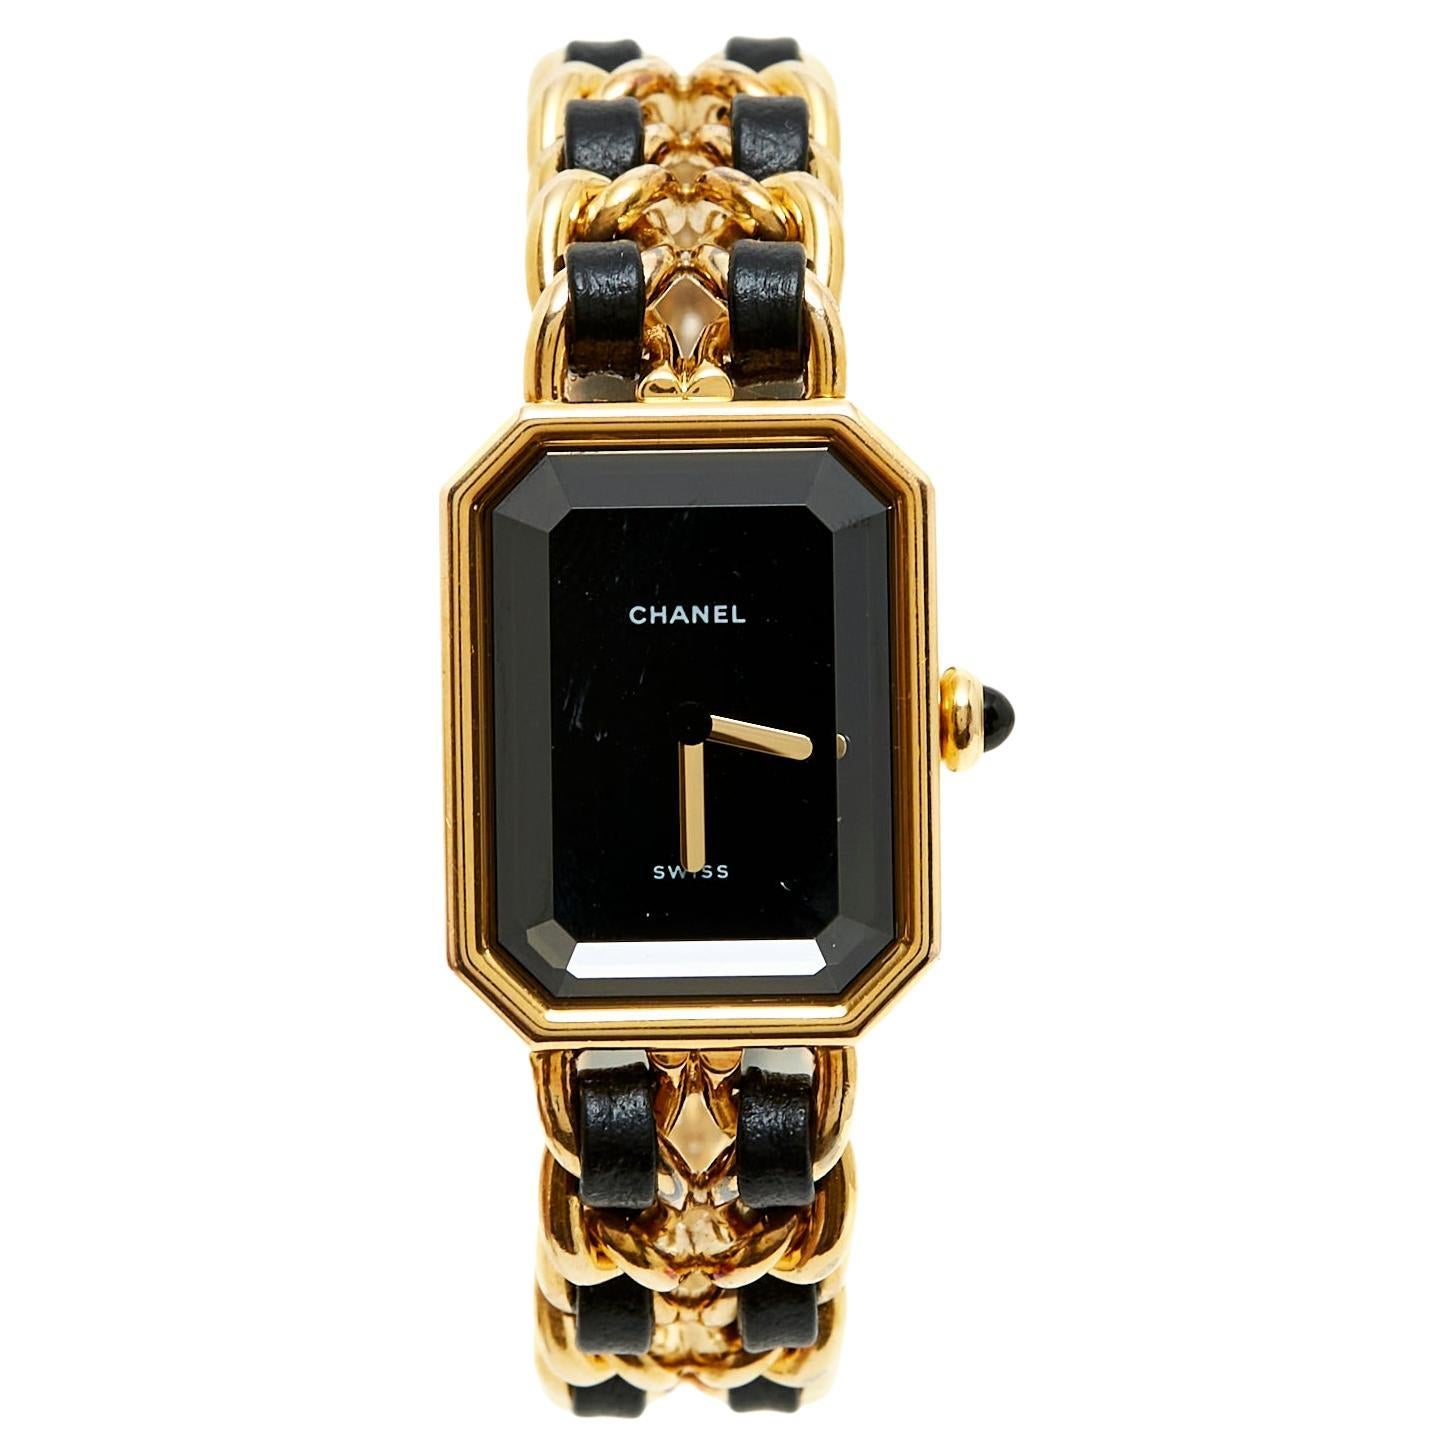 1987 Chanel Premiere watch size M Pristine Condition